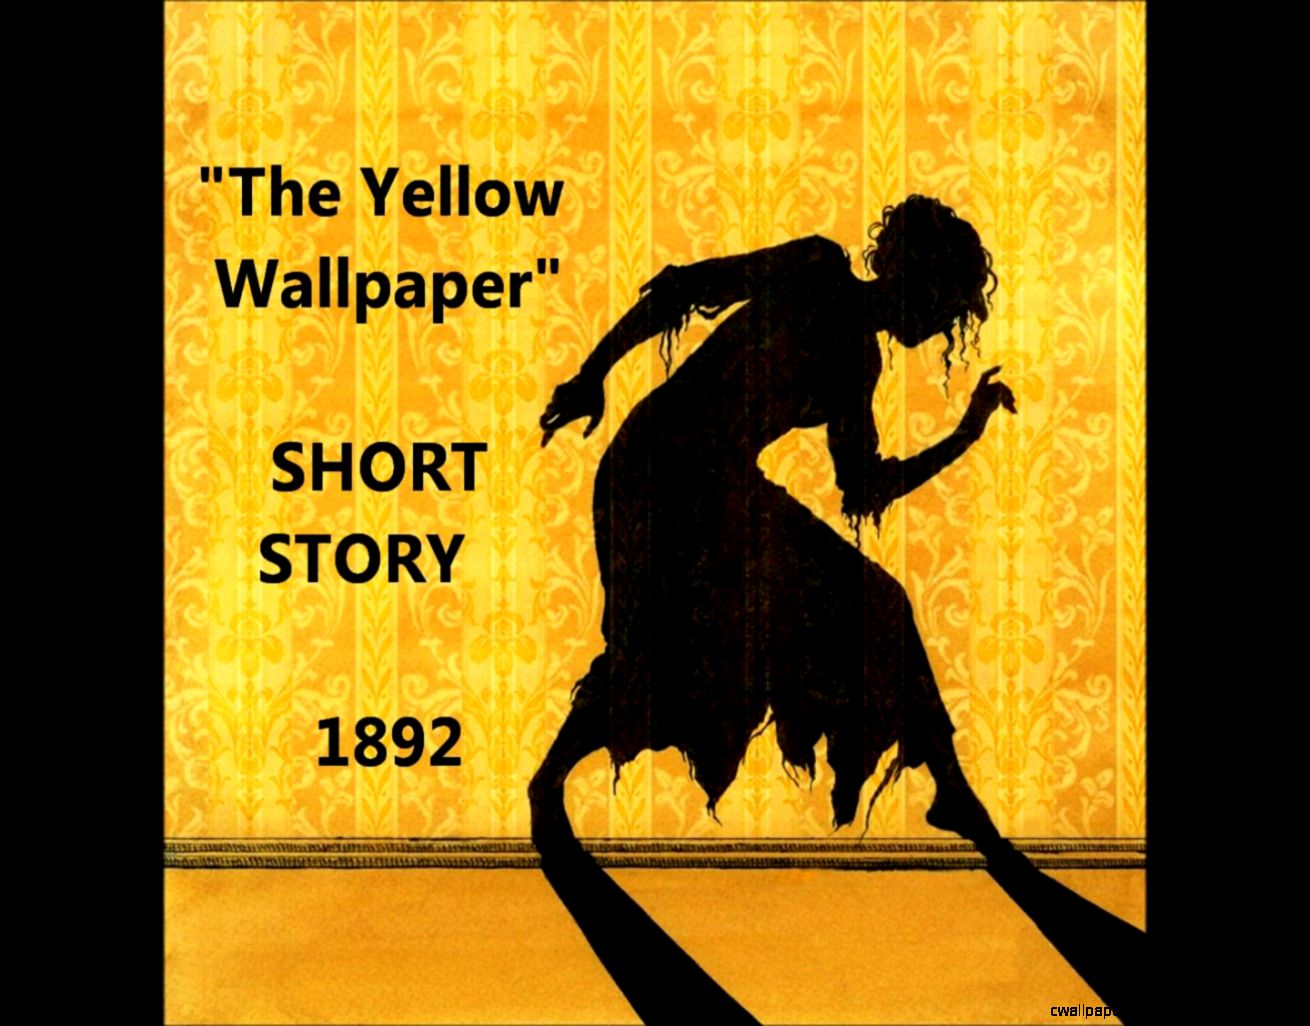 The Yellow Wallpaperquot Audio Classic Charlotte Perkins Gilman